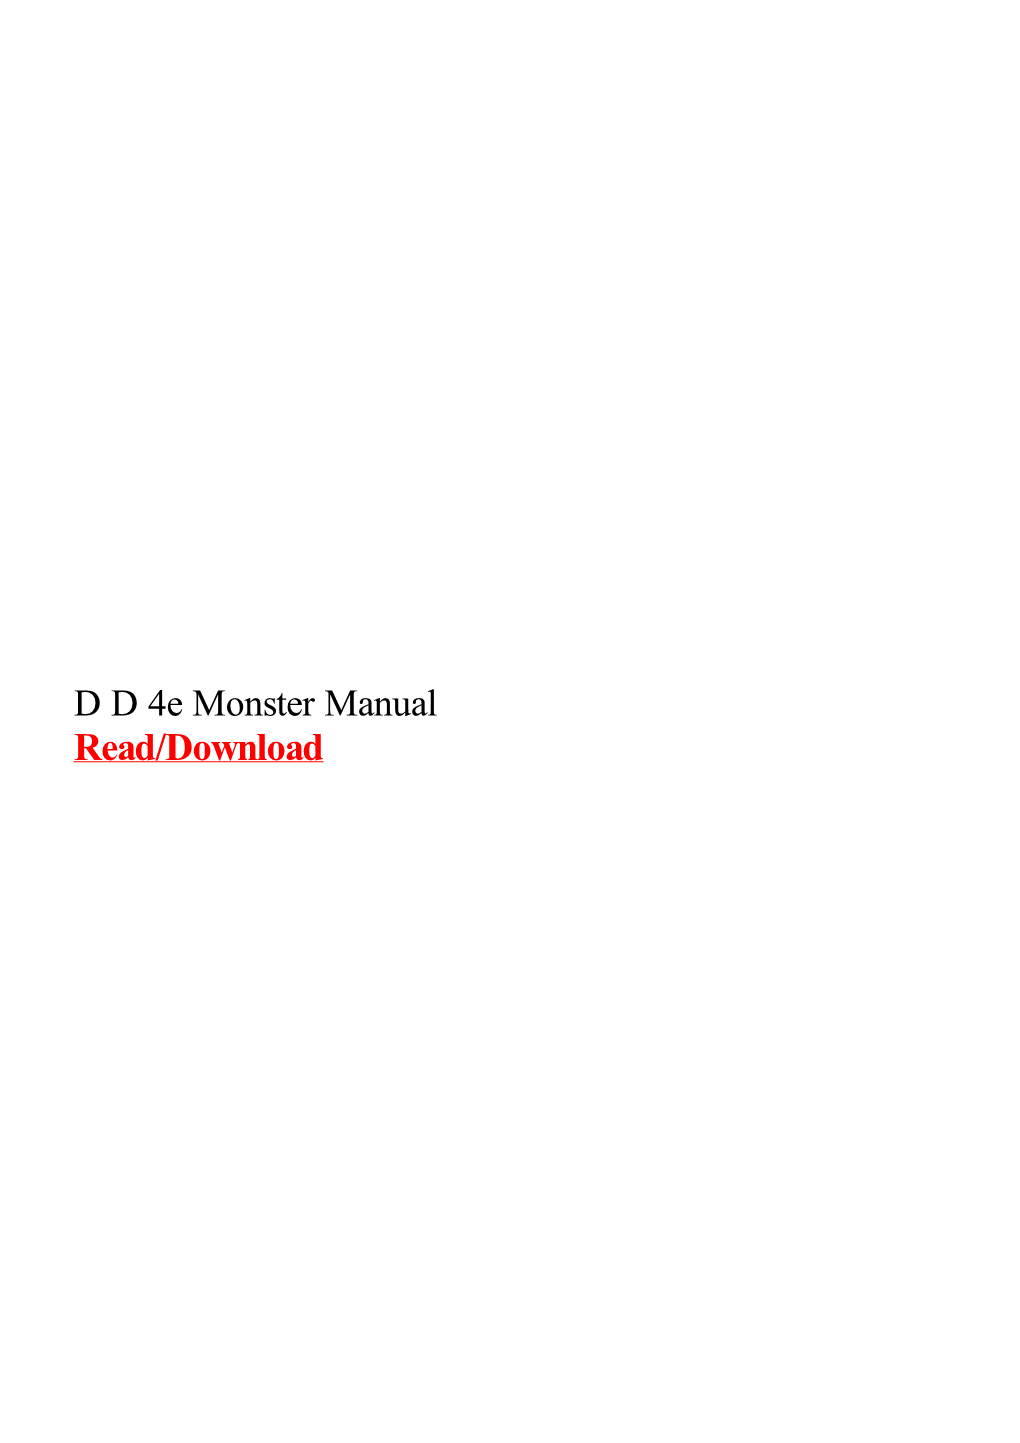 D D 4E Monster Manual